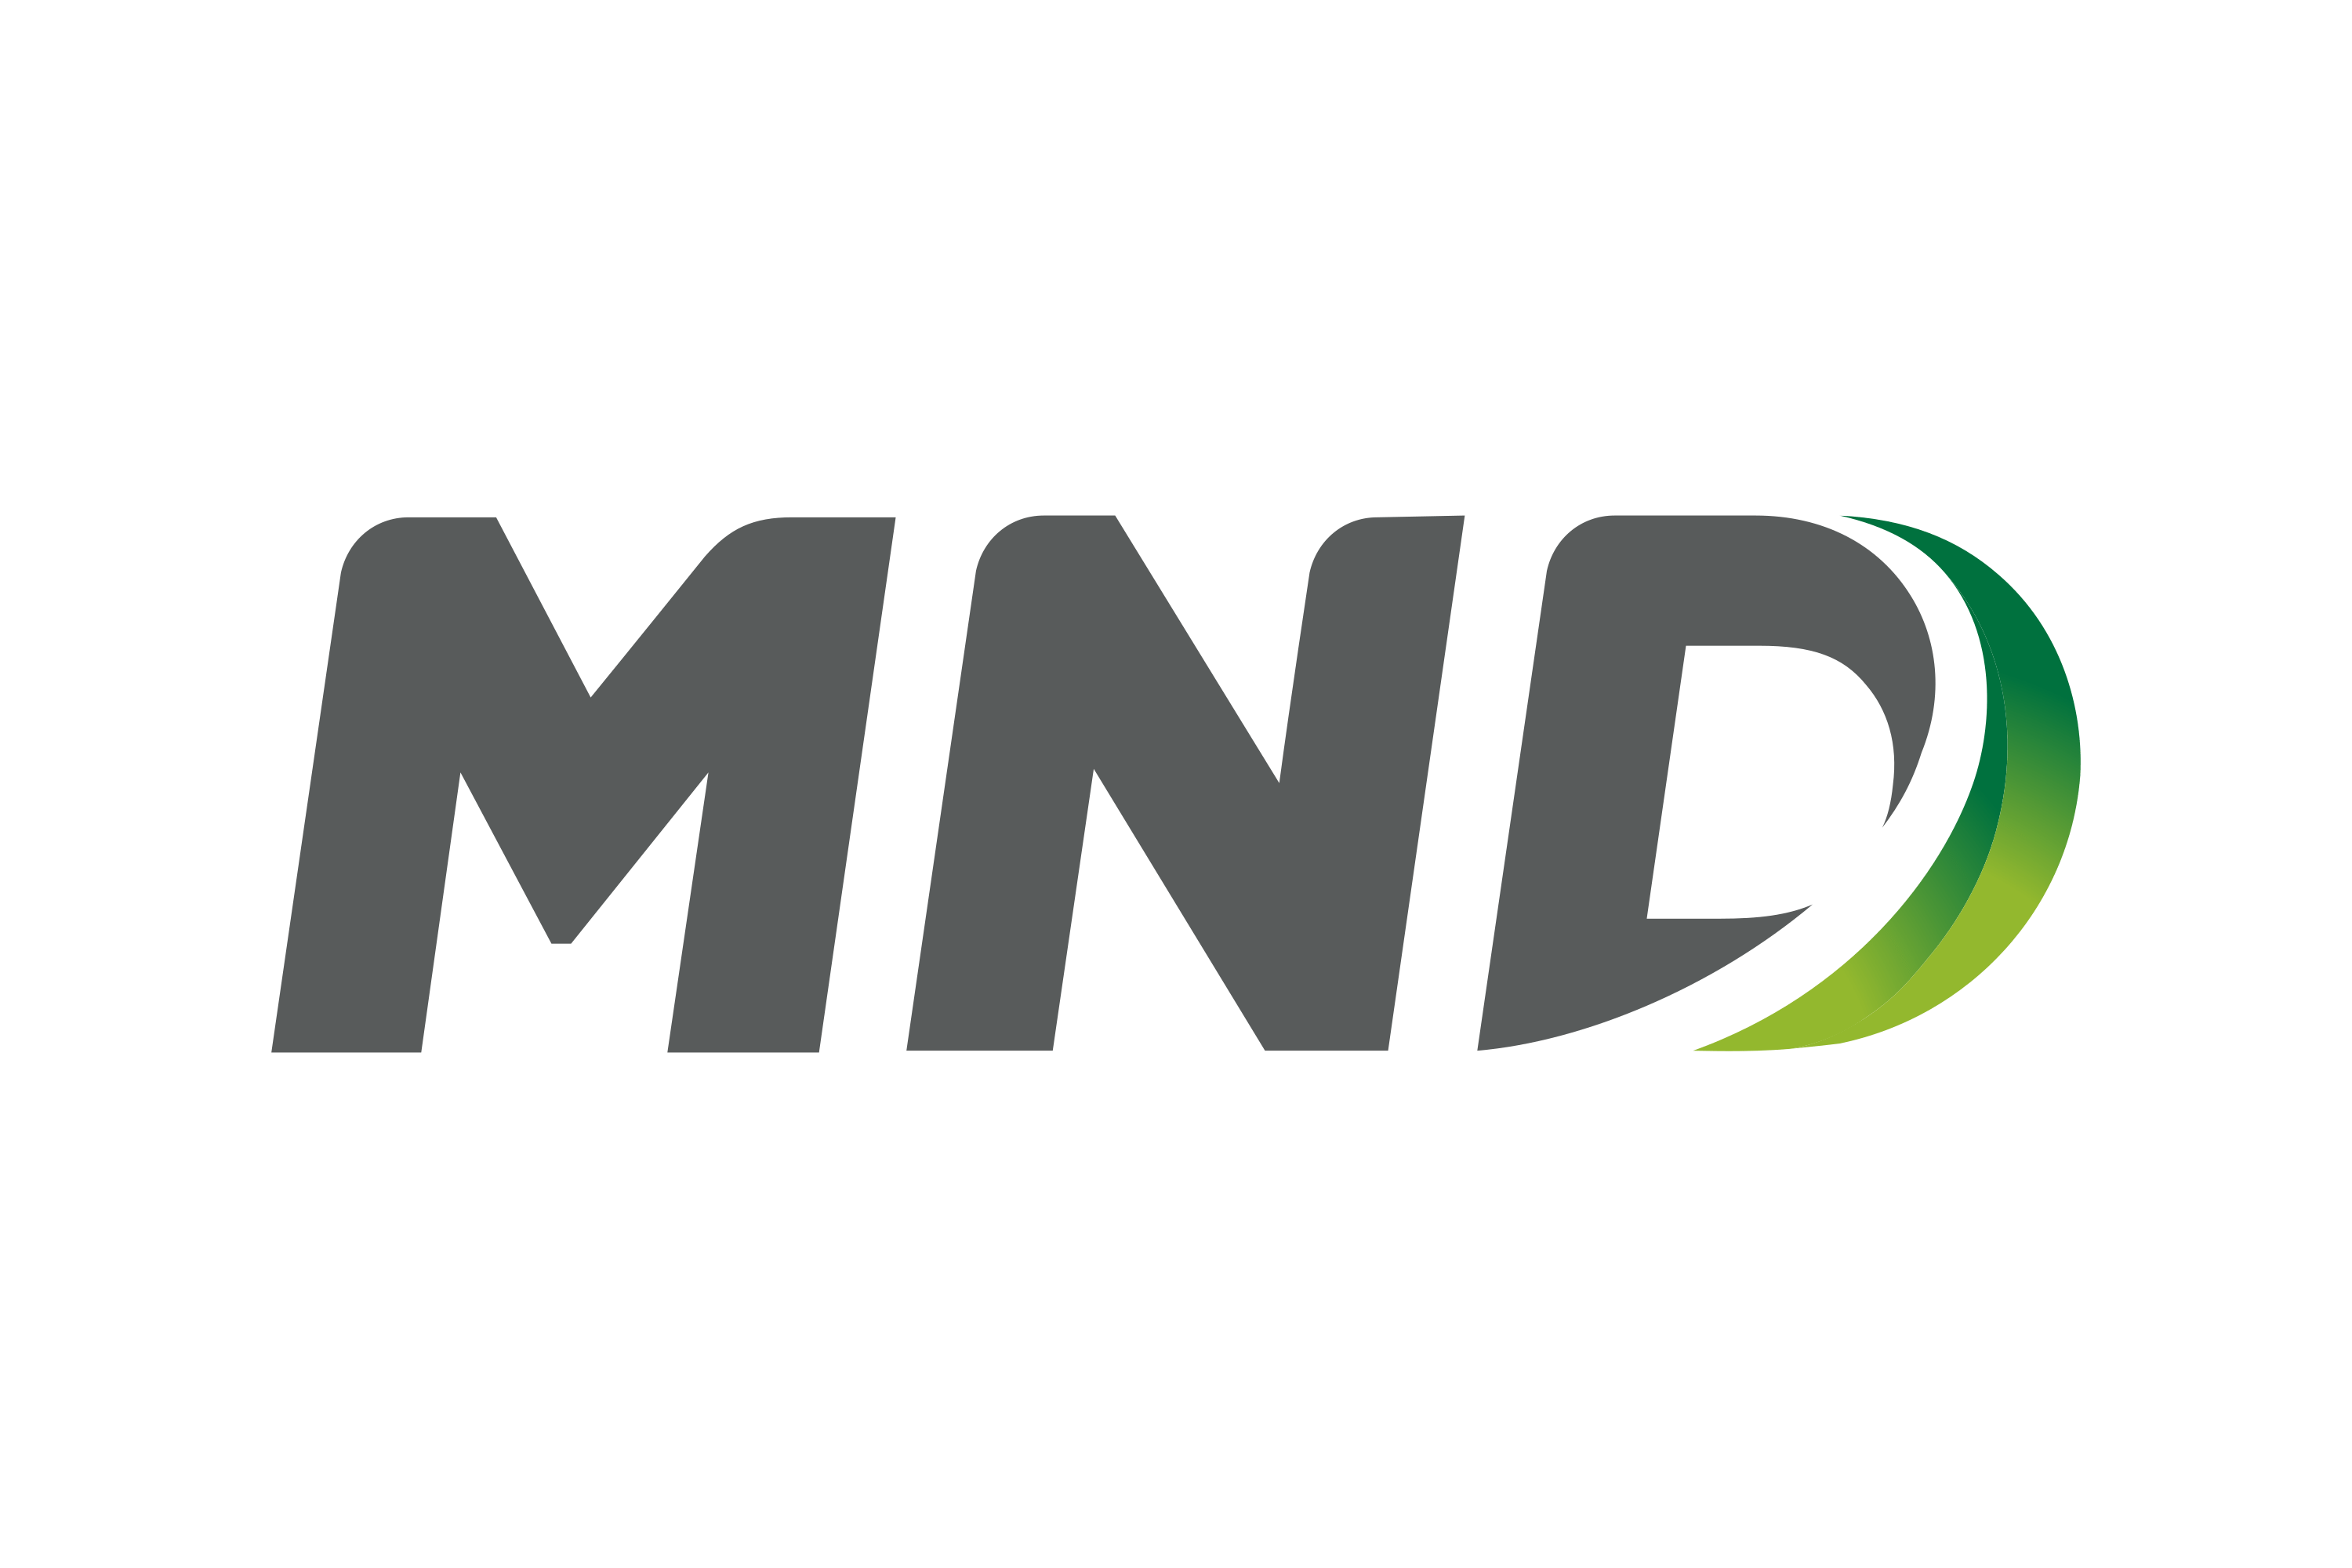 MND Logo